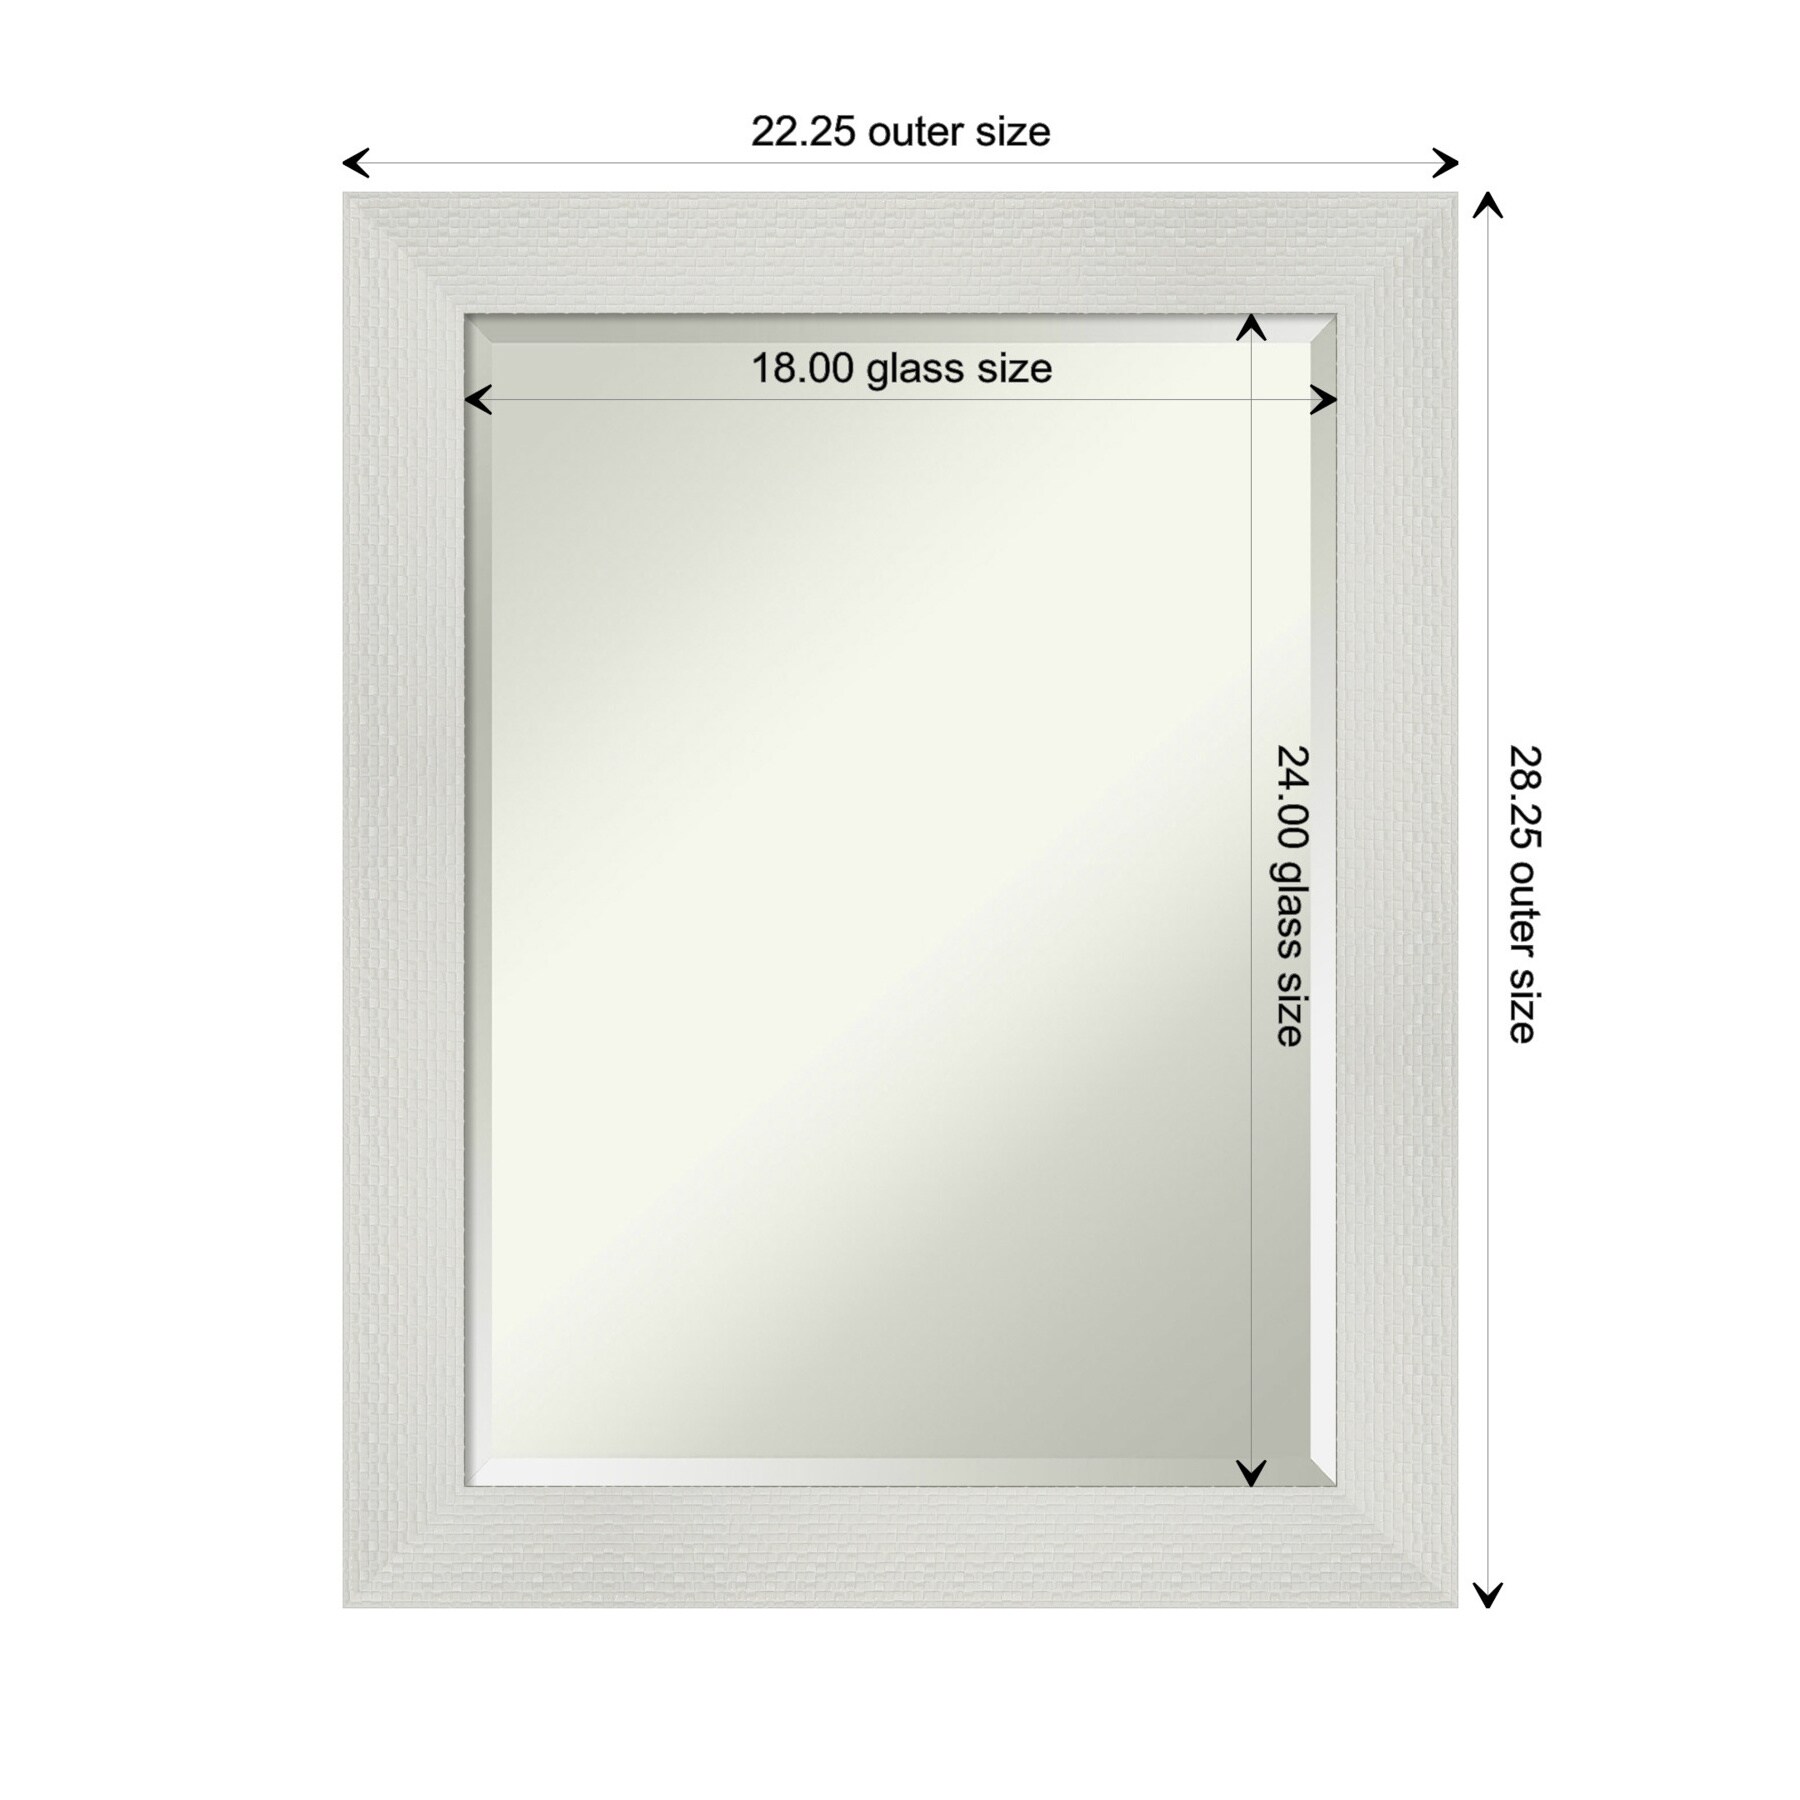 Amanti Art Mosaic White Frame 22.25-in W x 28.25-in H Glossy White Rectangular Bathroom Vanity Mirror